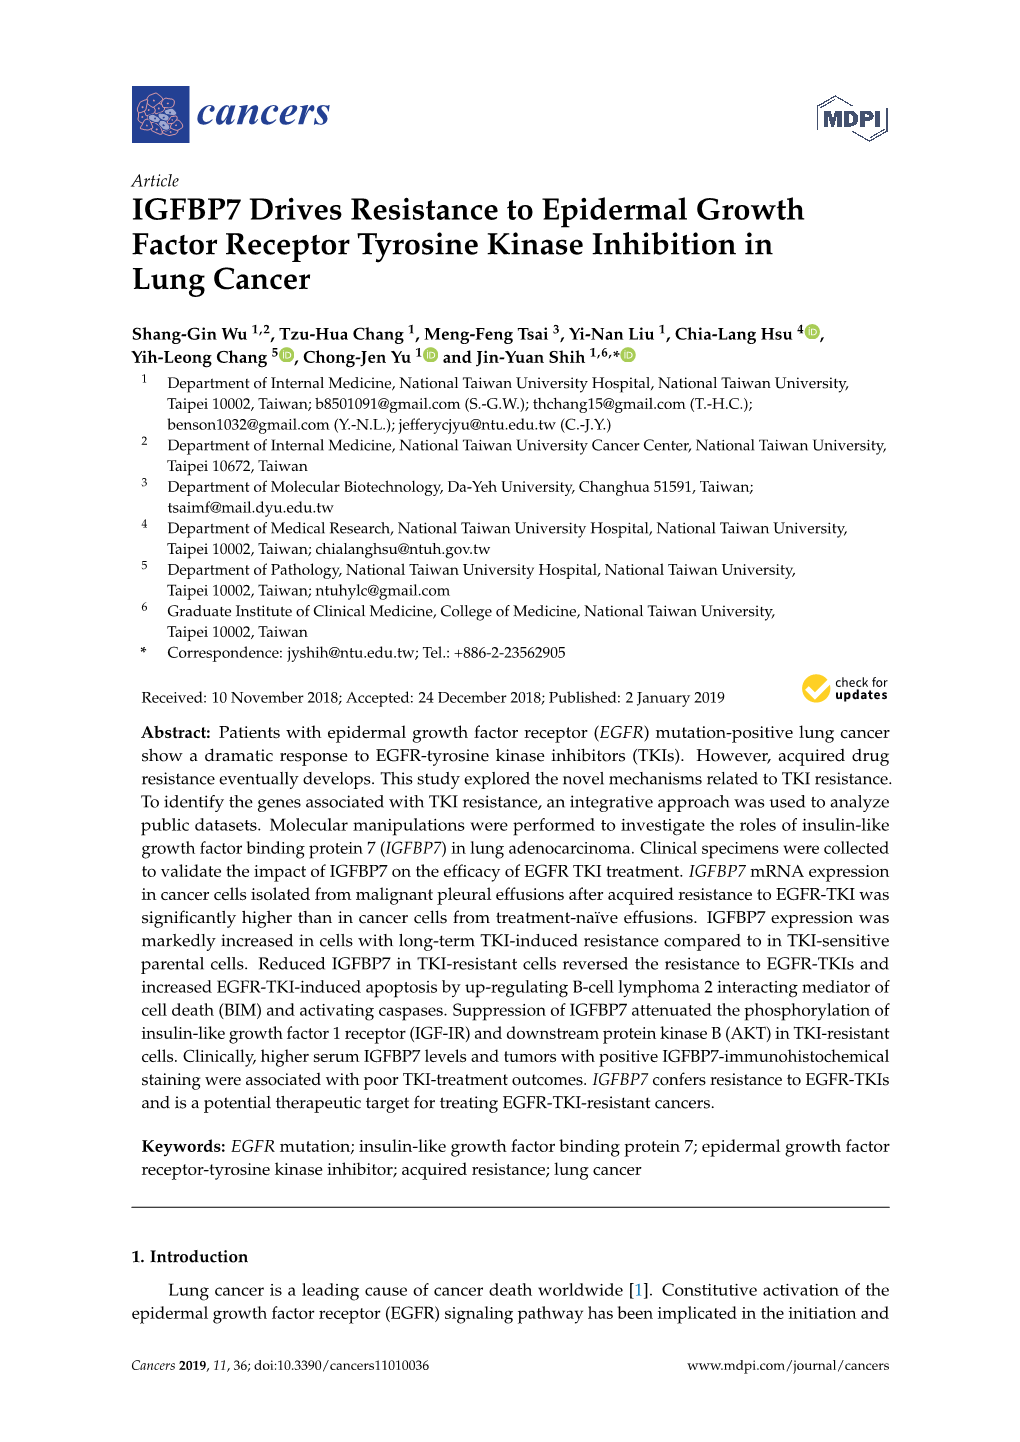 IGFBP7 Drives Resistance to Epidermal Growth Factor Receptor Tyrosine Kinase Inhibition in Lung Cancer